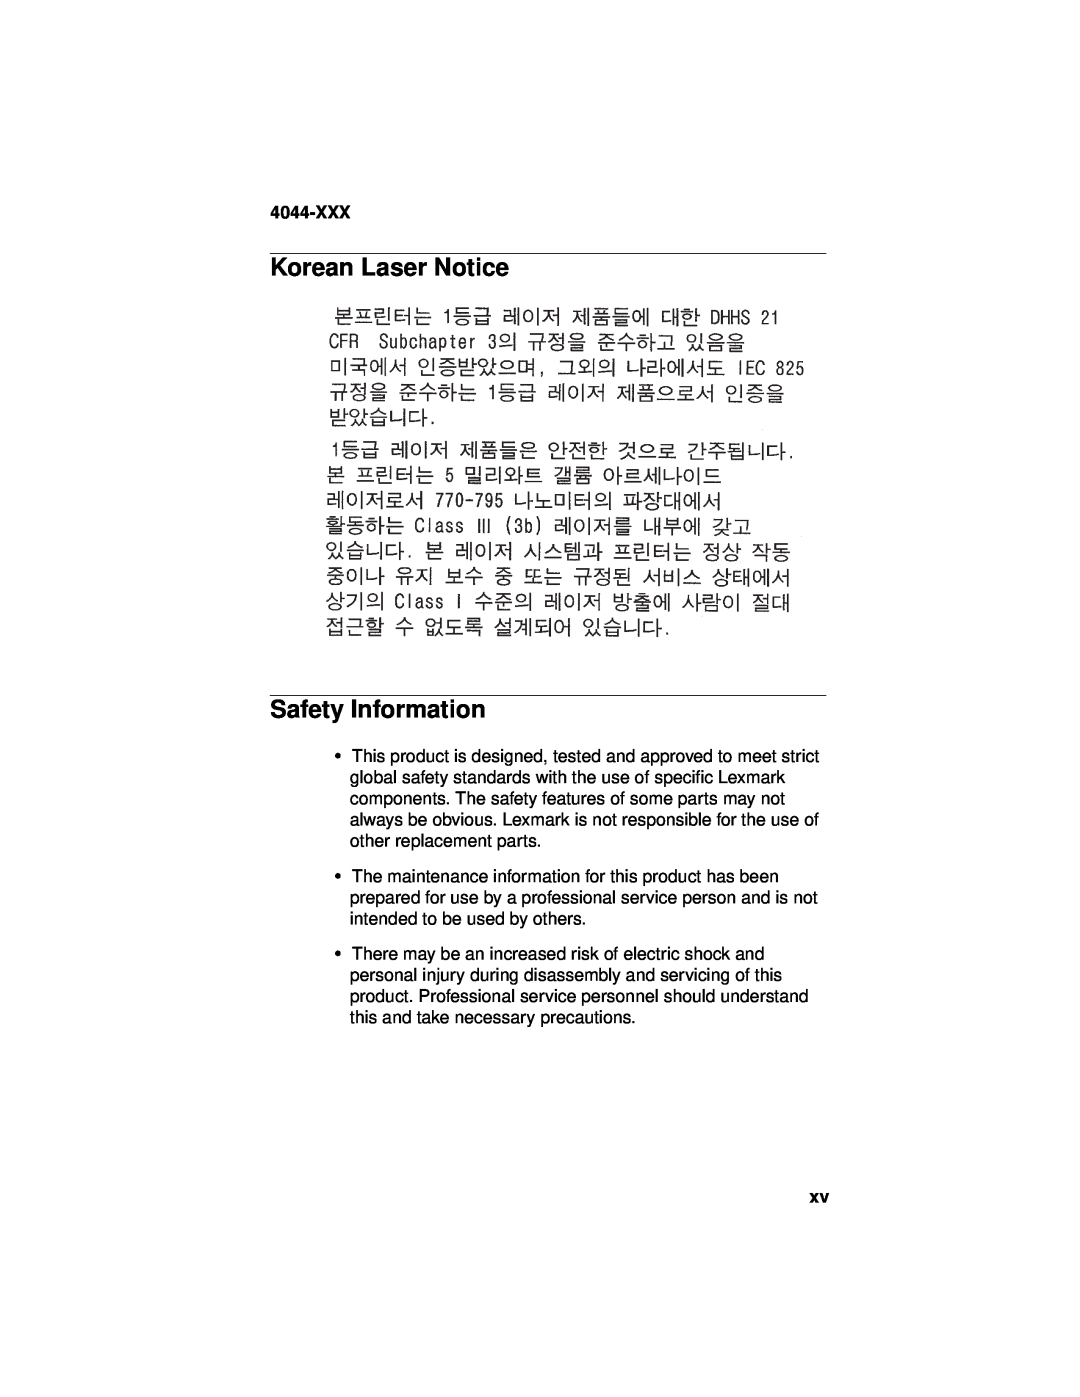 Lexmark E310 manual Korean Laser Notice Safety Information, 4044-XXX 